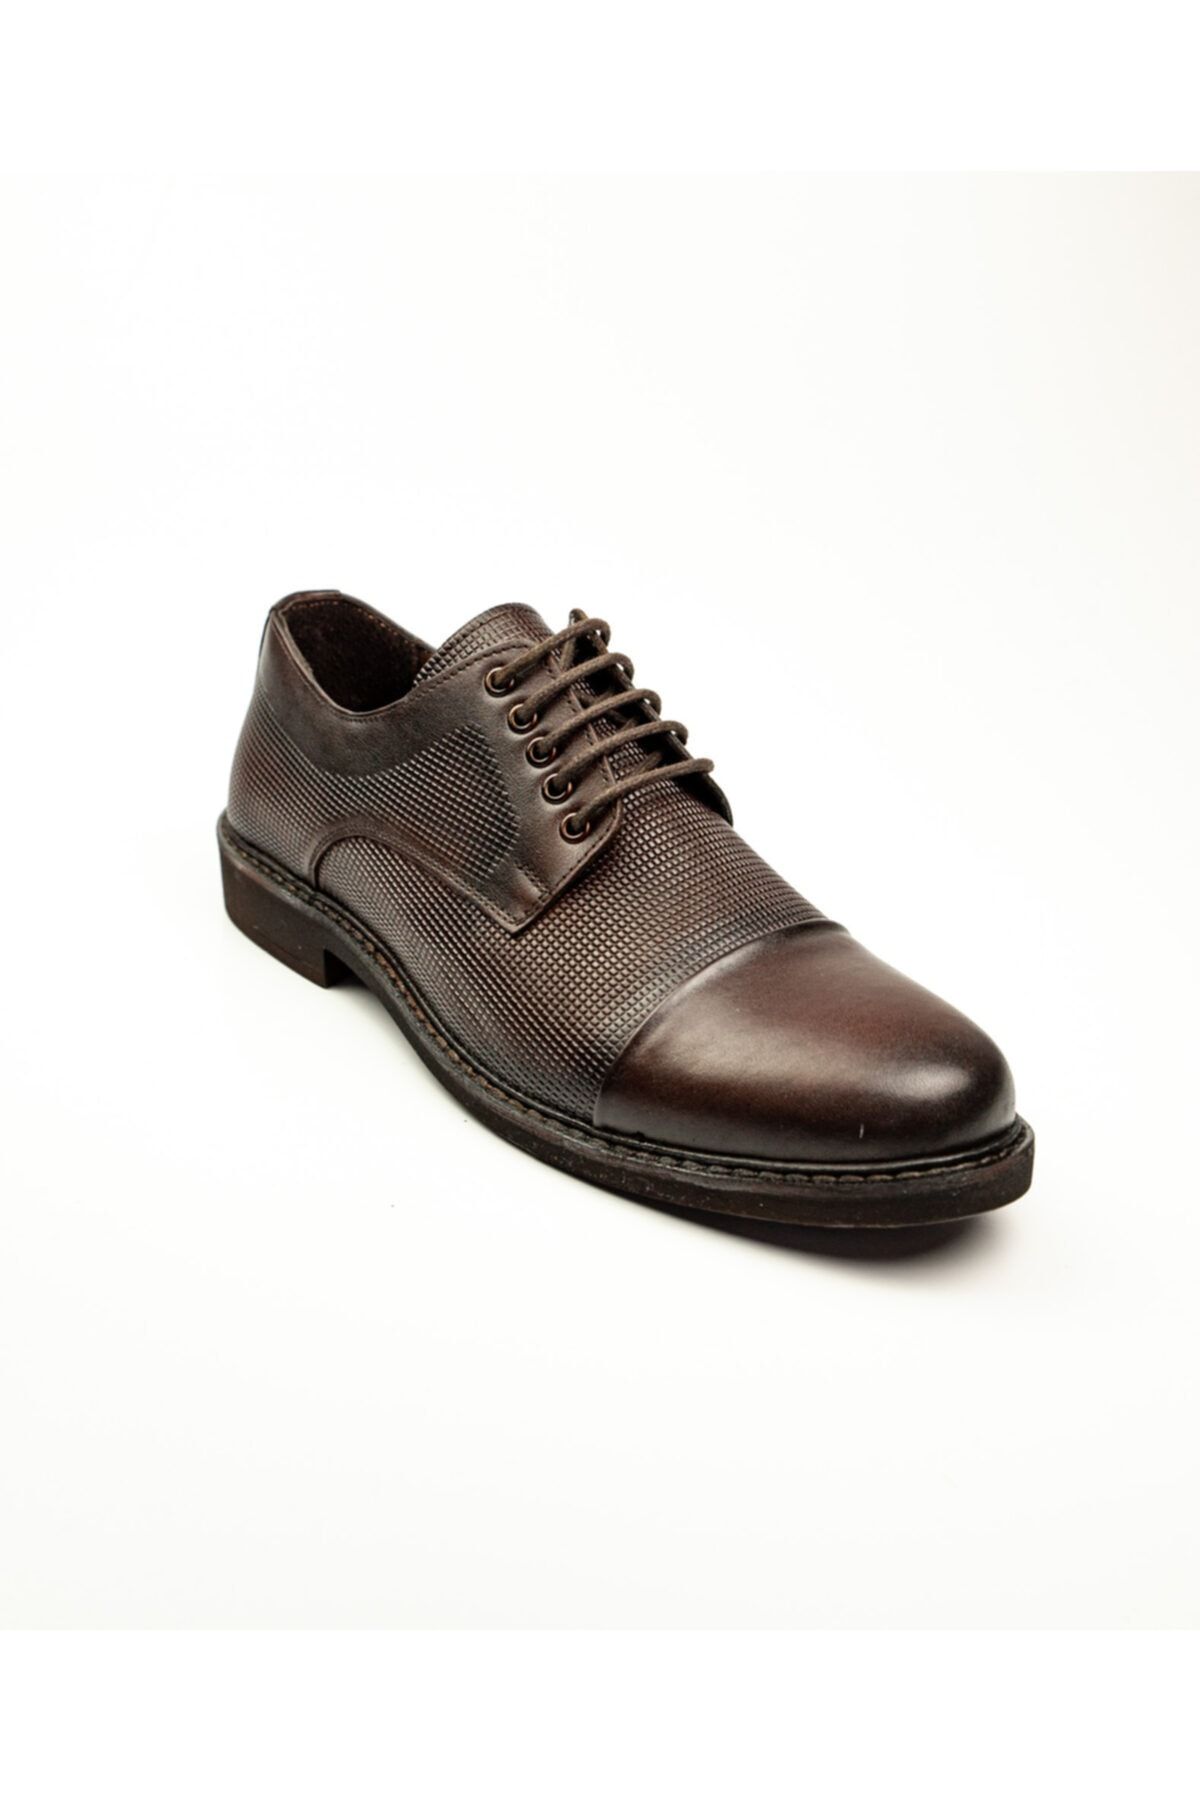 Nobel 999 Kahverengi Deri Klasik Erkek Ayakkabı Kahverengi-42